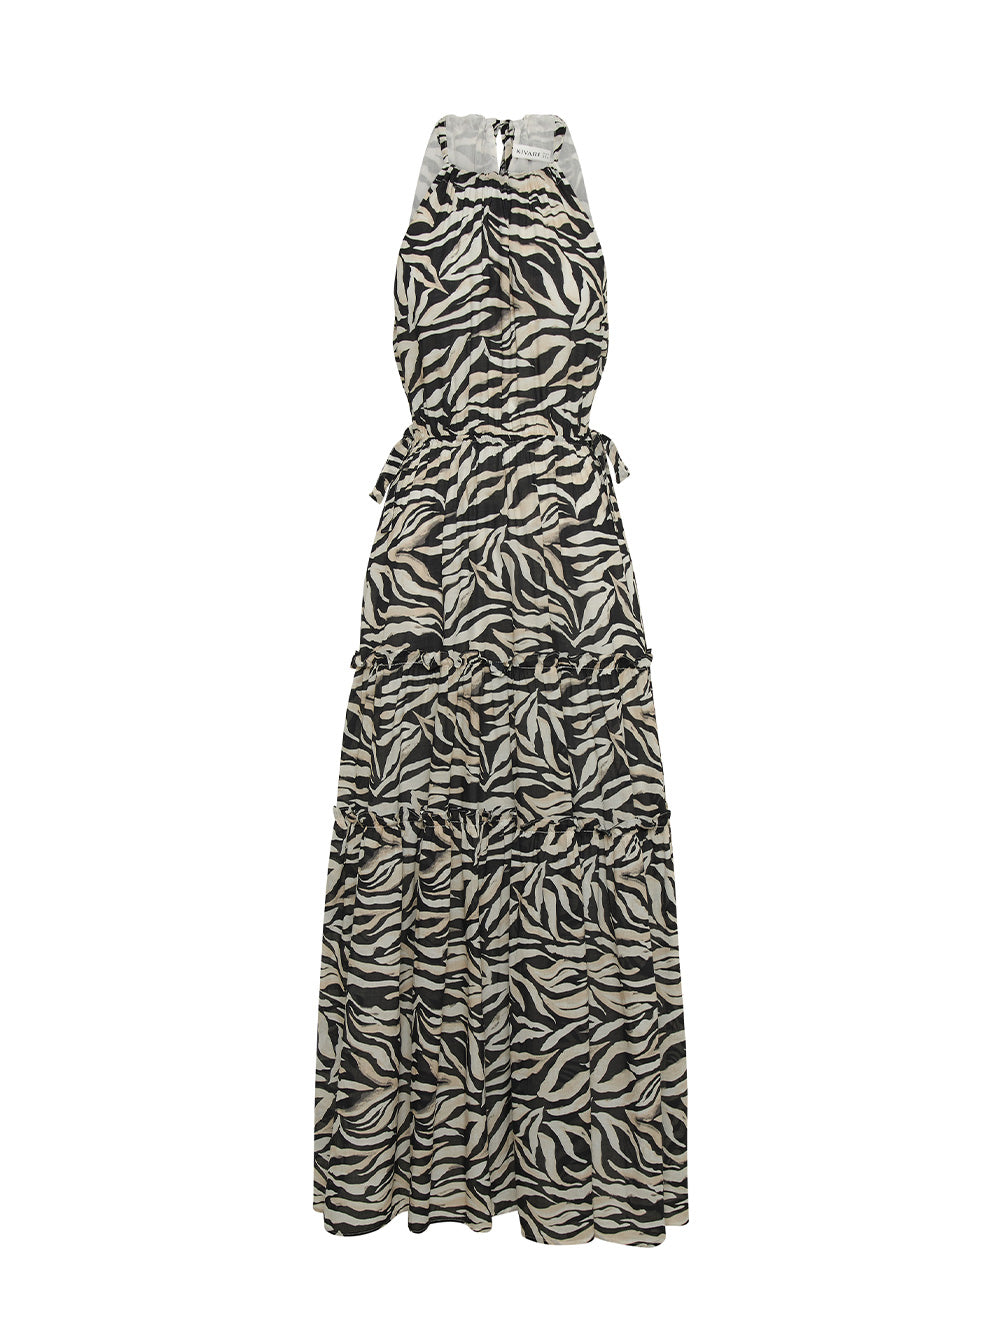 Zenya Halter Maxi Dress KIVARI | Zebra printed halterneck maxi dress